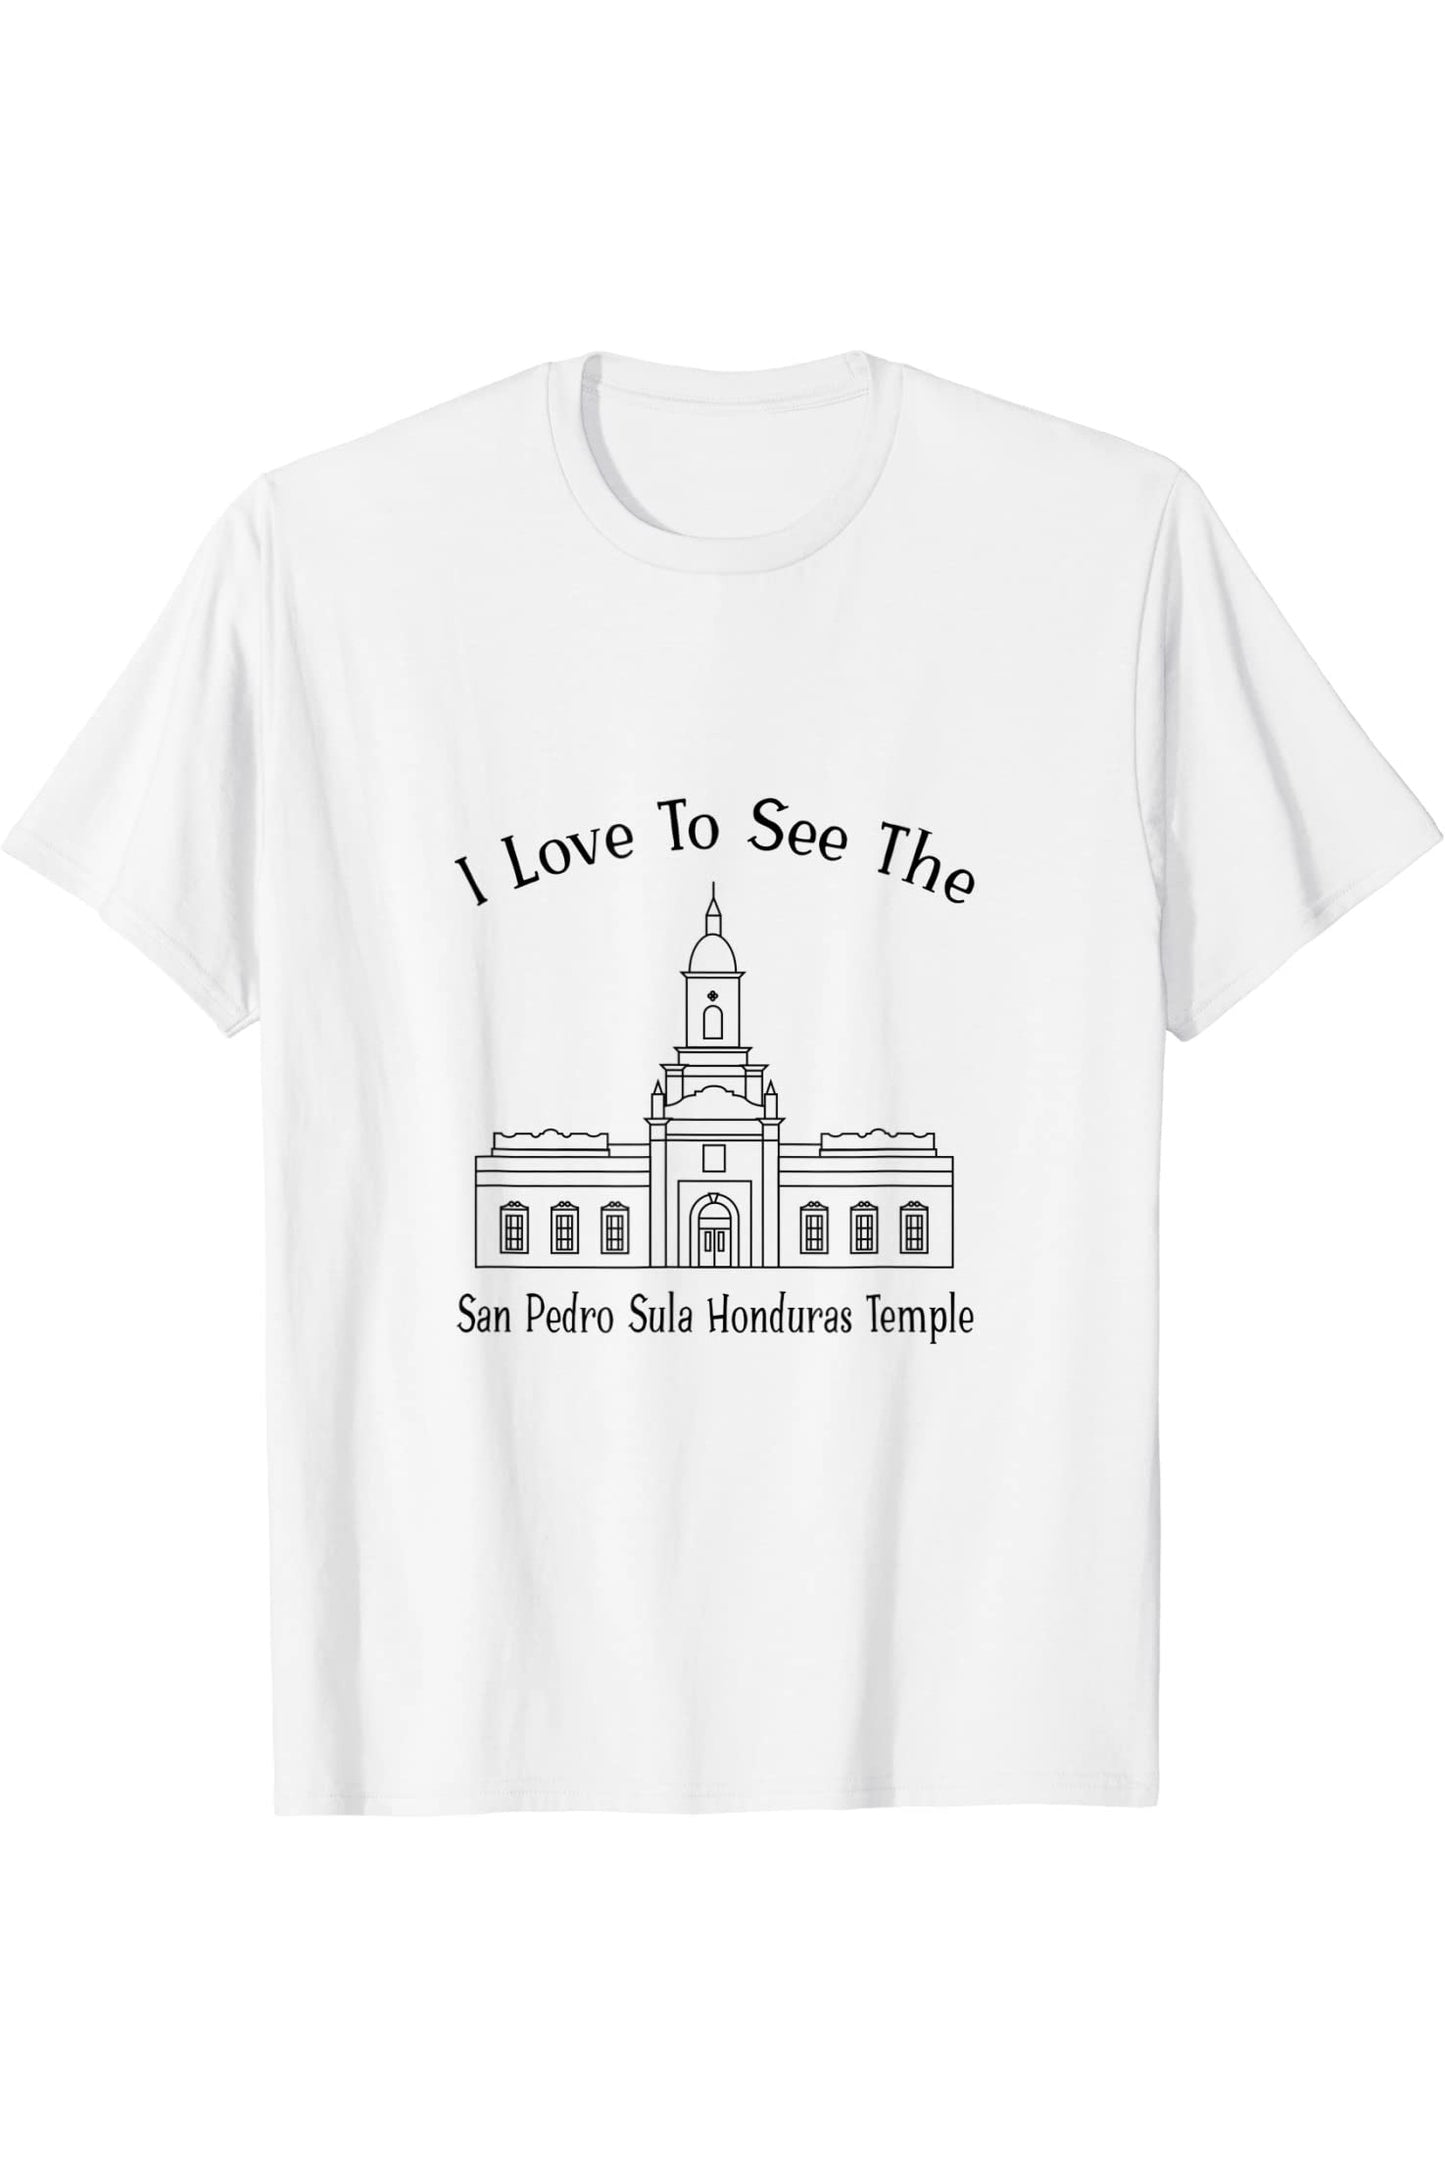 San Pedro Sula Honduras Temple T-Shirt - Happy Style (English) US